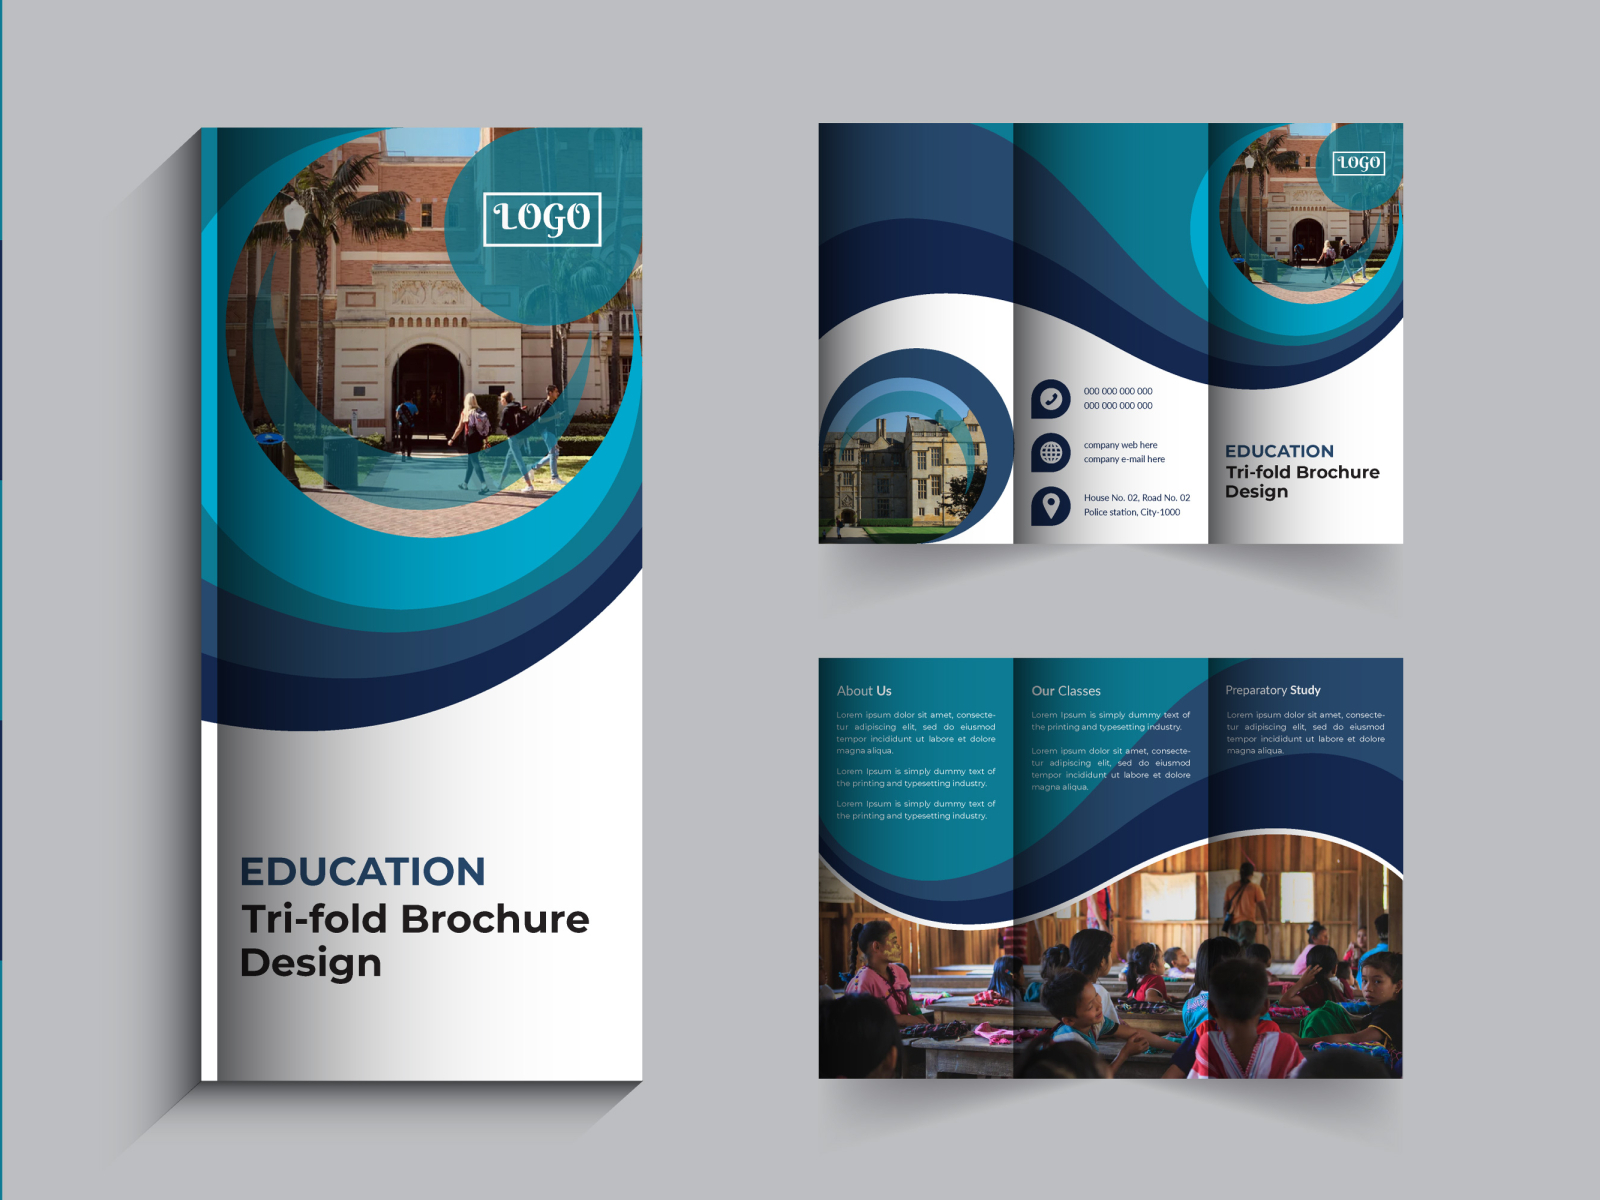 Education Tri-fold Brochure Template Design by hmabdulaziz21 on Intended For School Brochure Design Templates